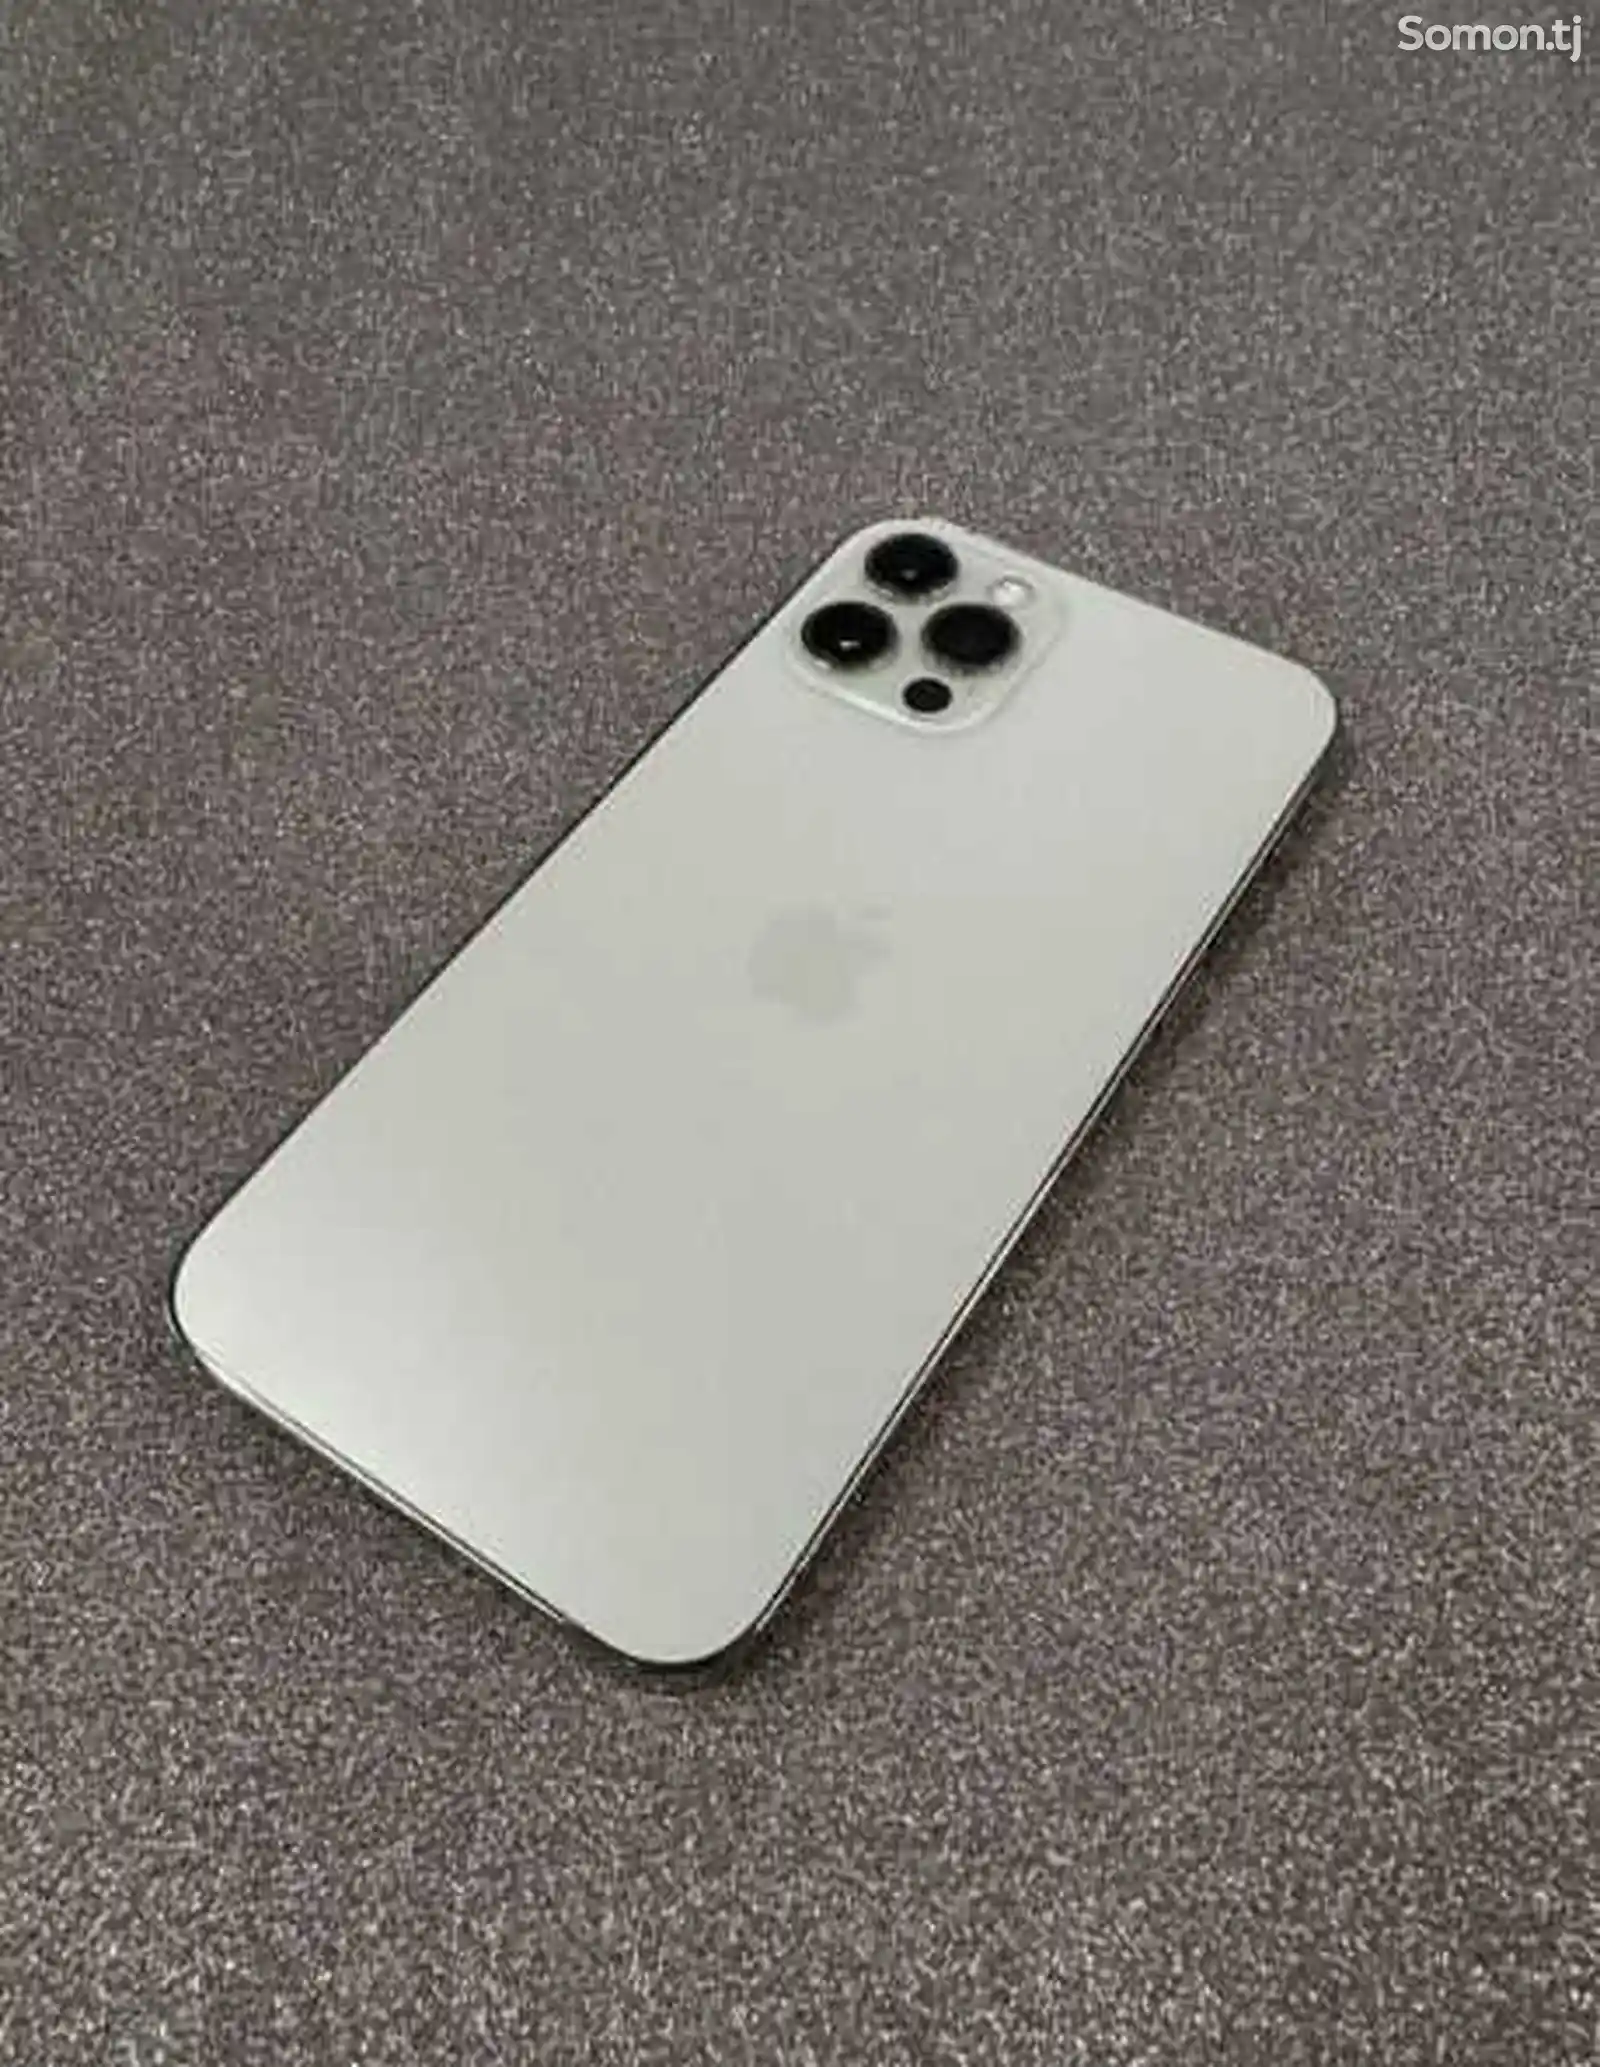 Apple iPhone 12 pro, 128 gb, Silver